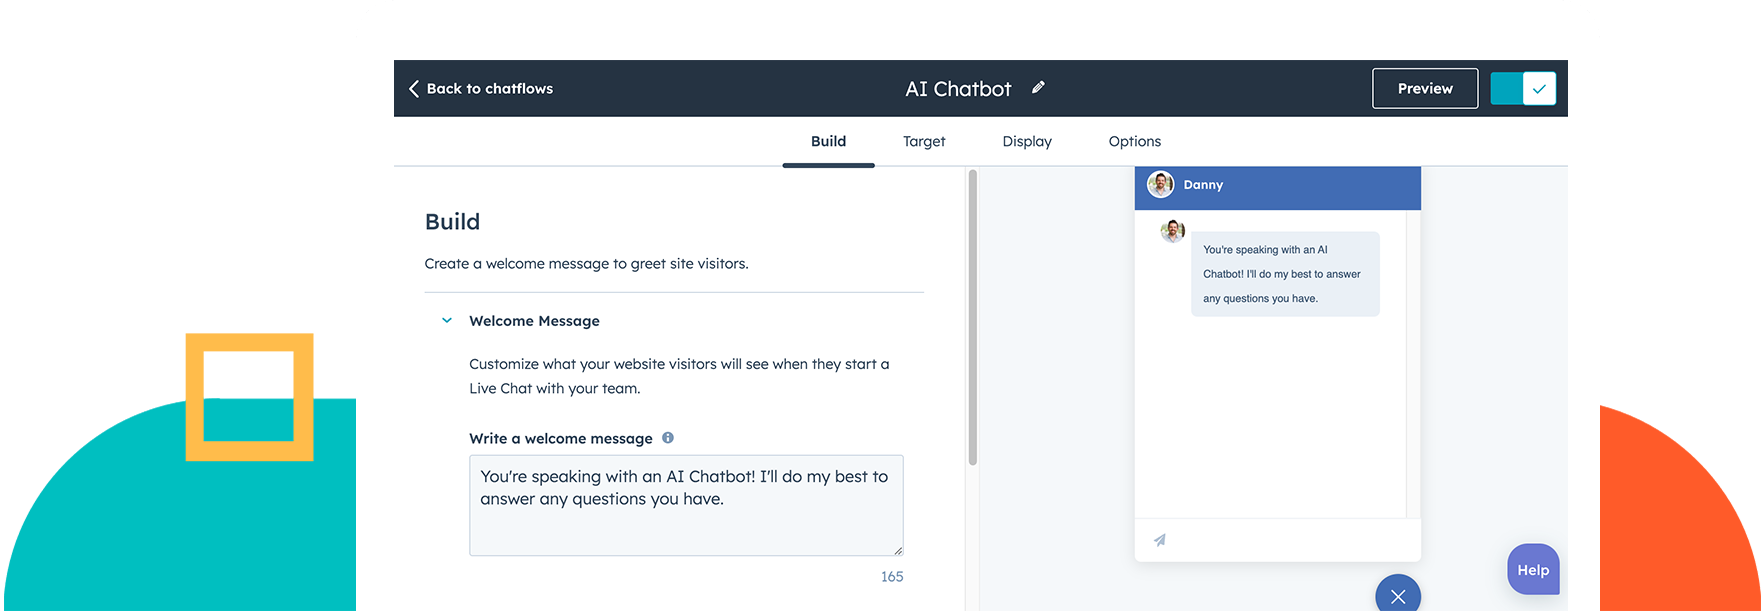 HubSpot product screenshot showing AI chatbot